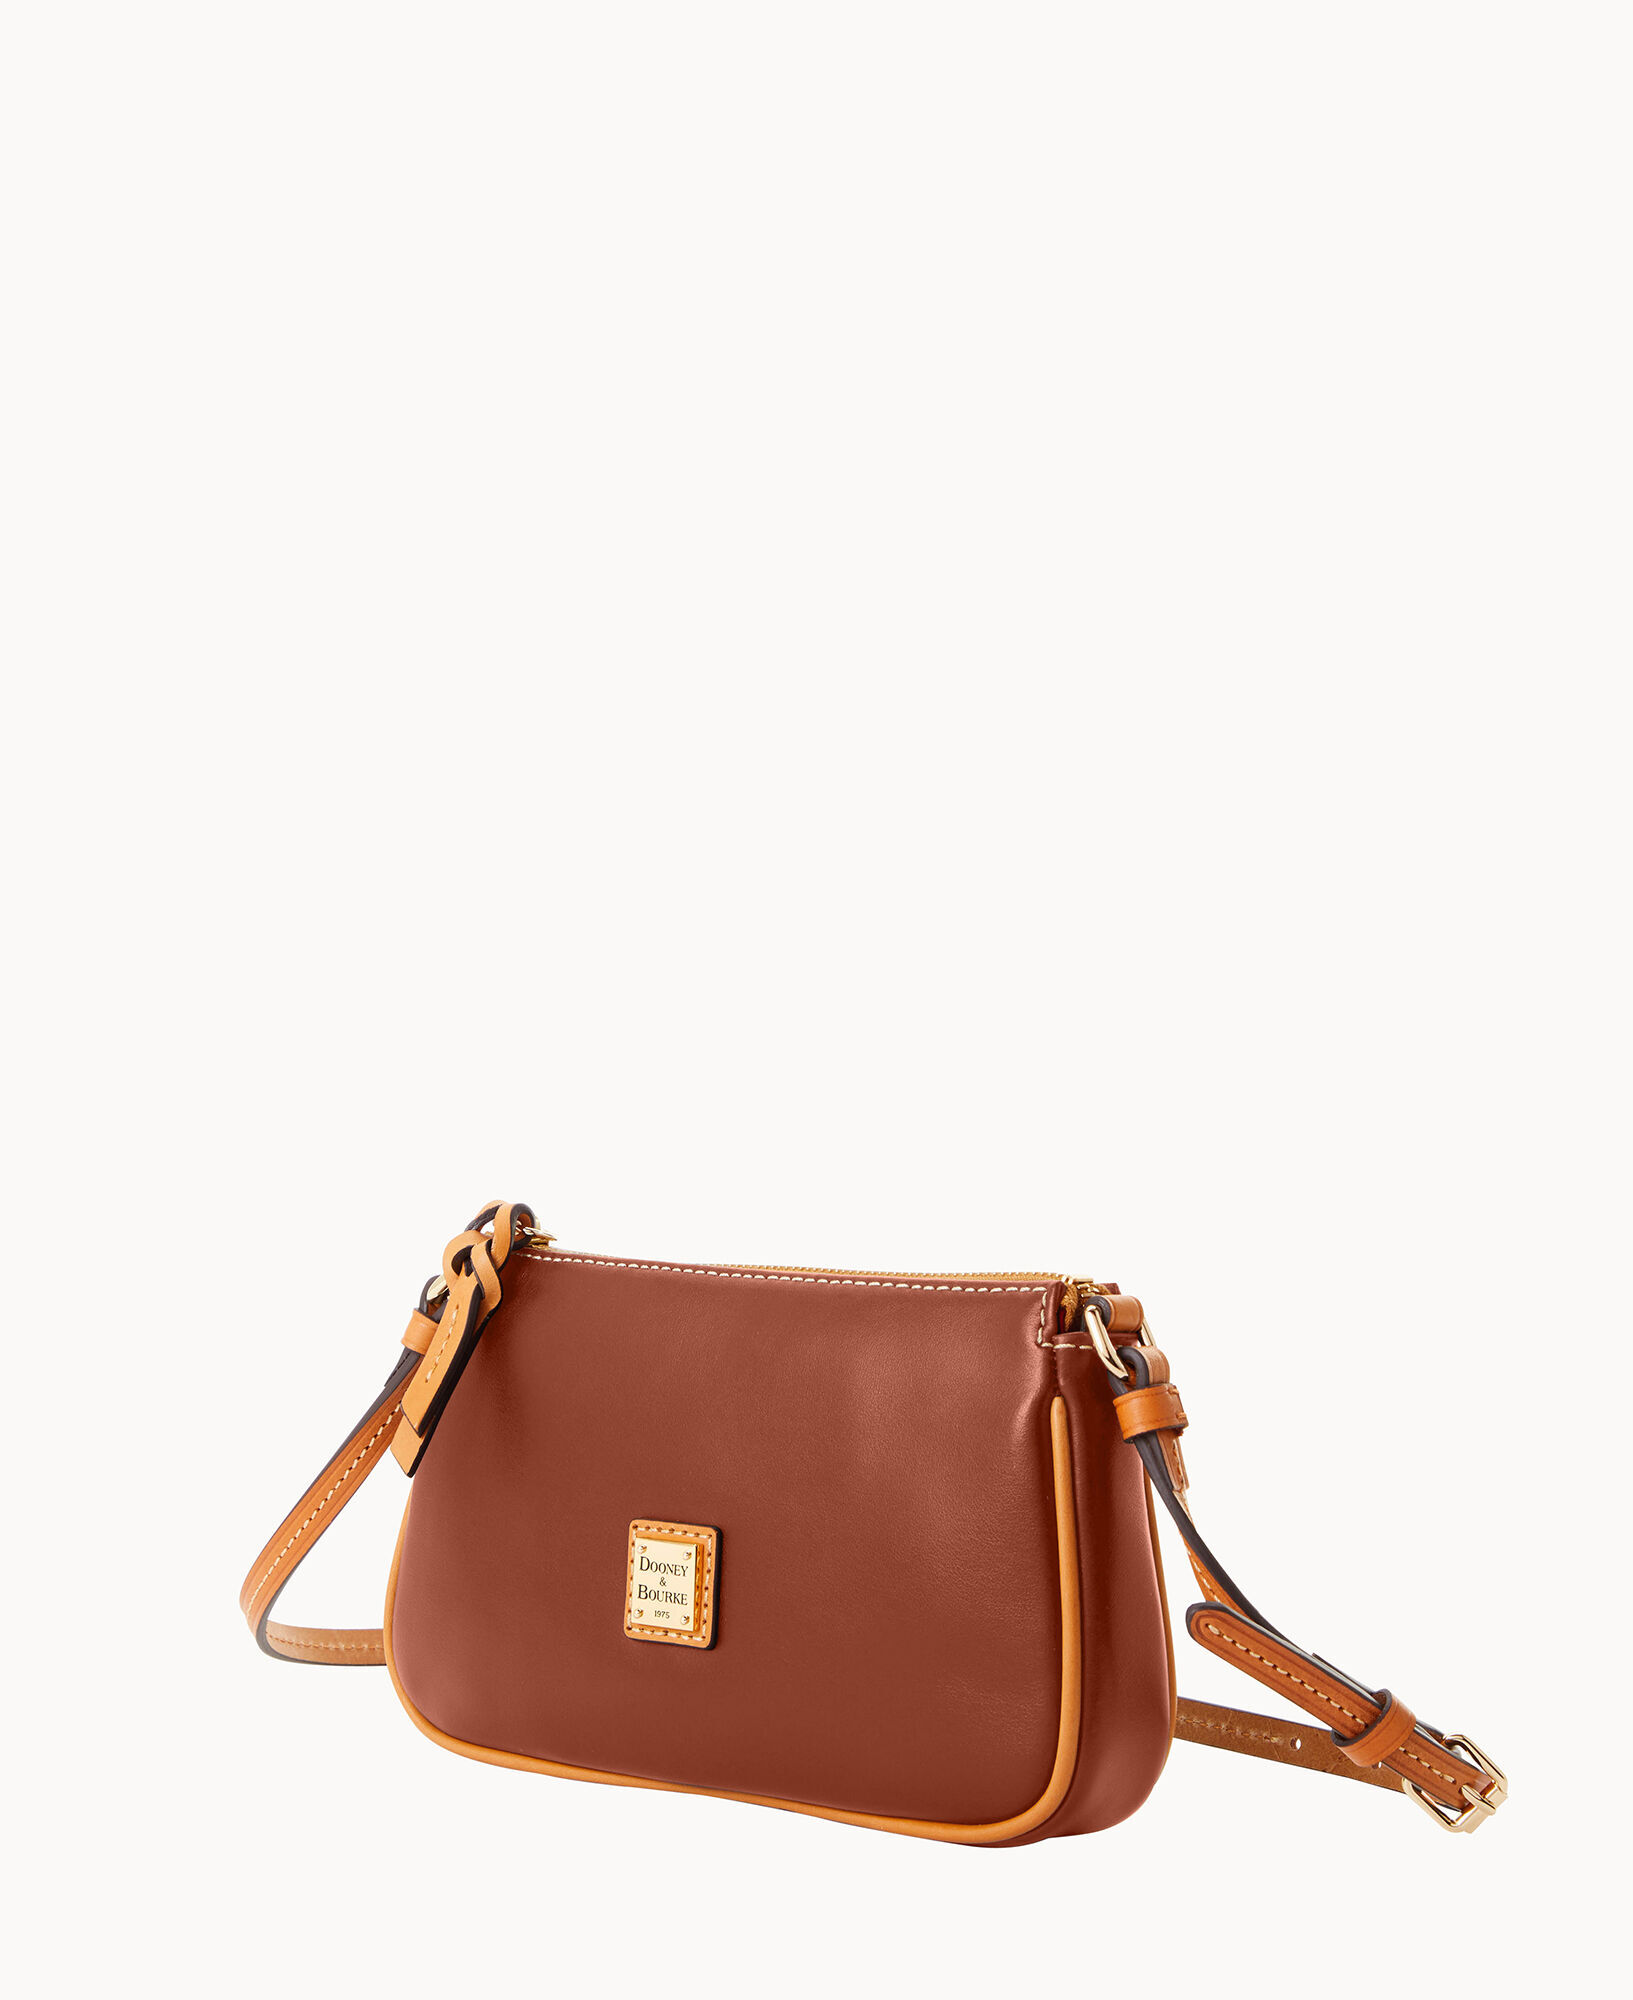 Dooney & Bourke Lexi Saffiano Leather Small Crossbody Bag